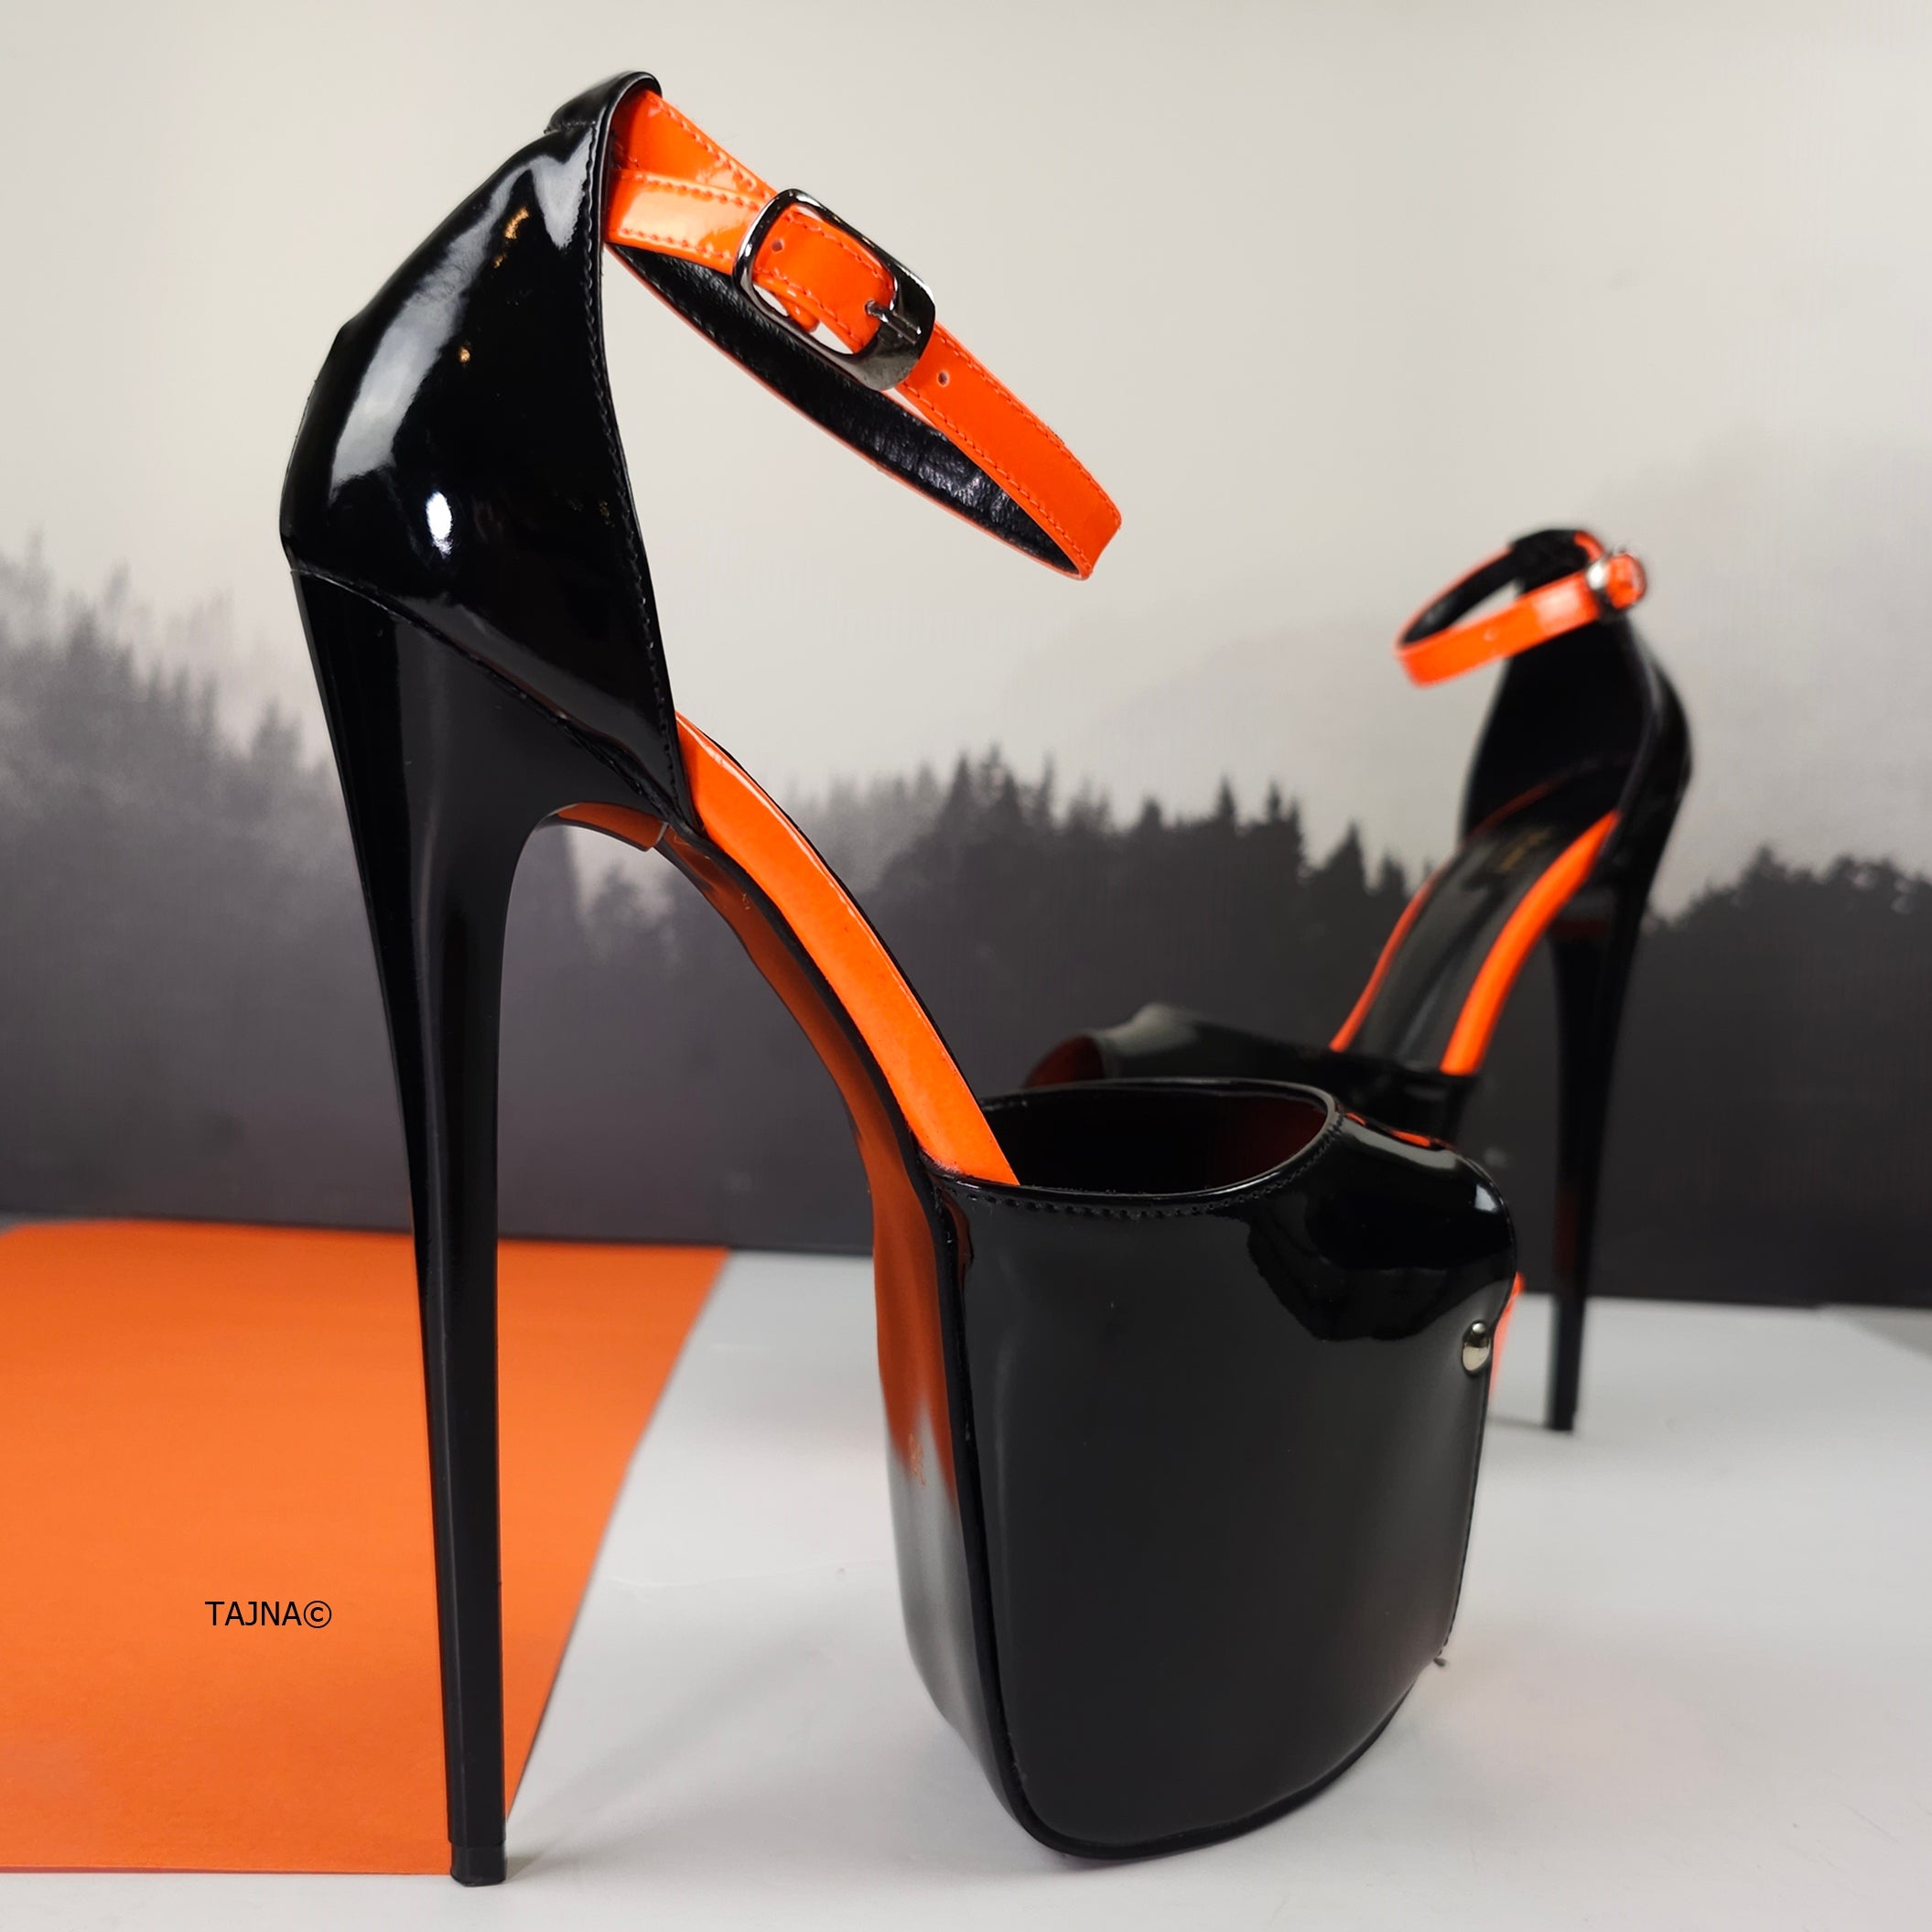 Stylish Platform Slipper Sandals - Latest Flatforms Lightweight,  Comfortable Heel Sandals for Women & Girls Heels - New